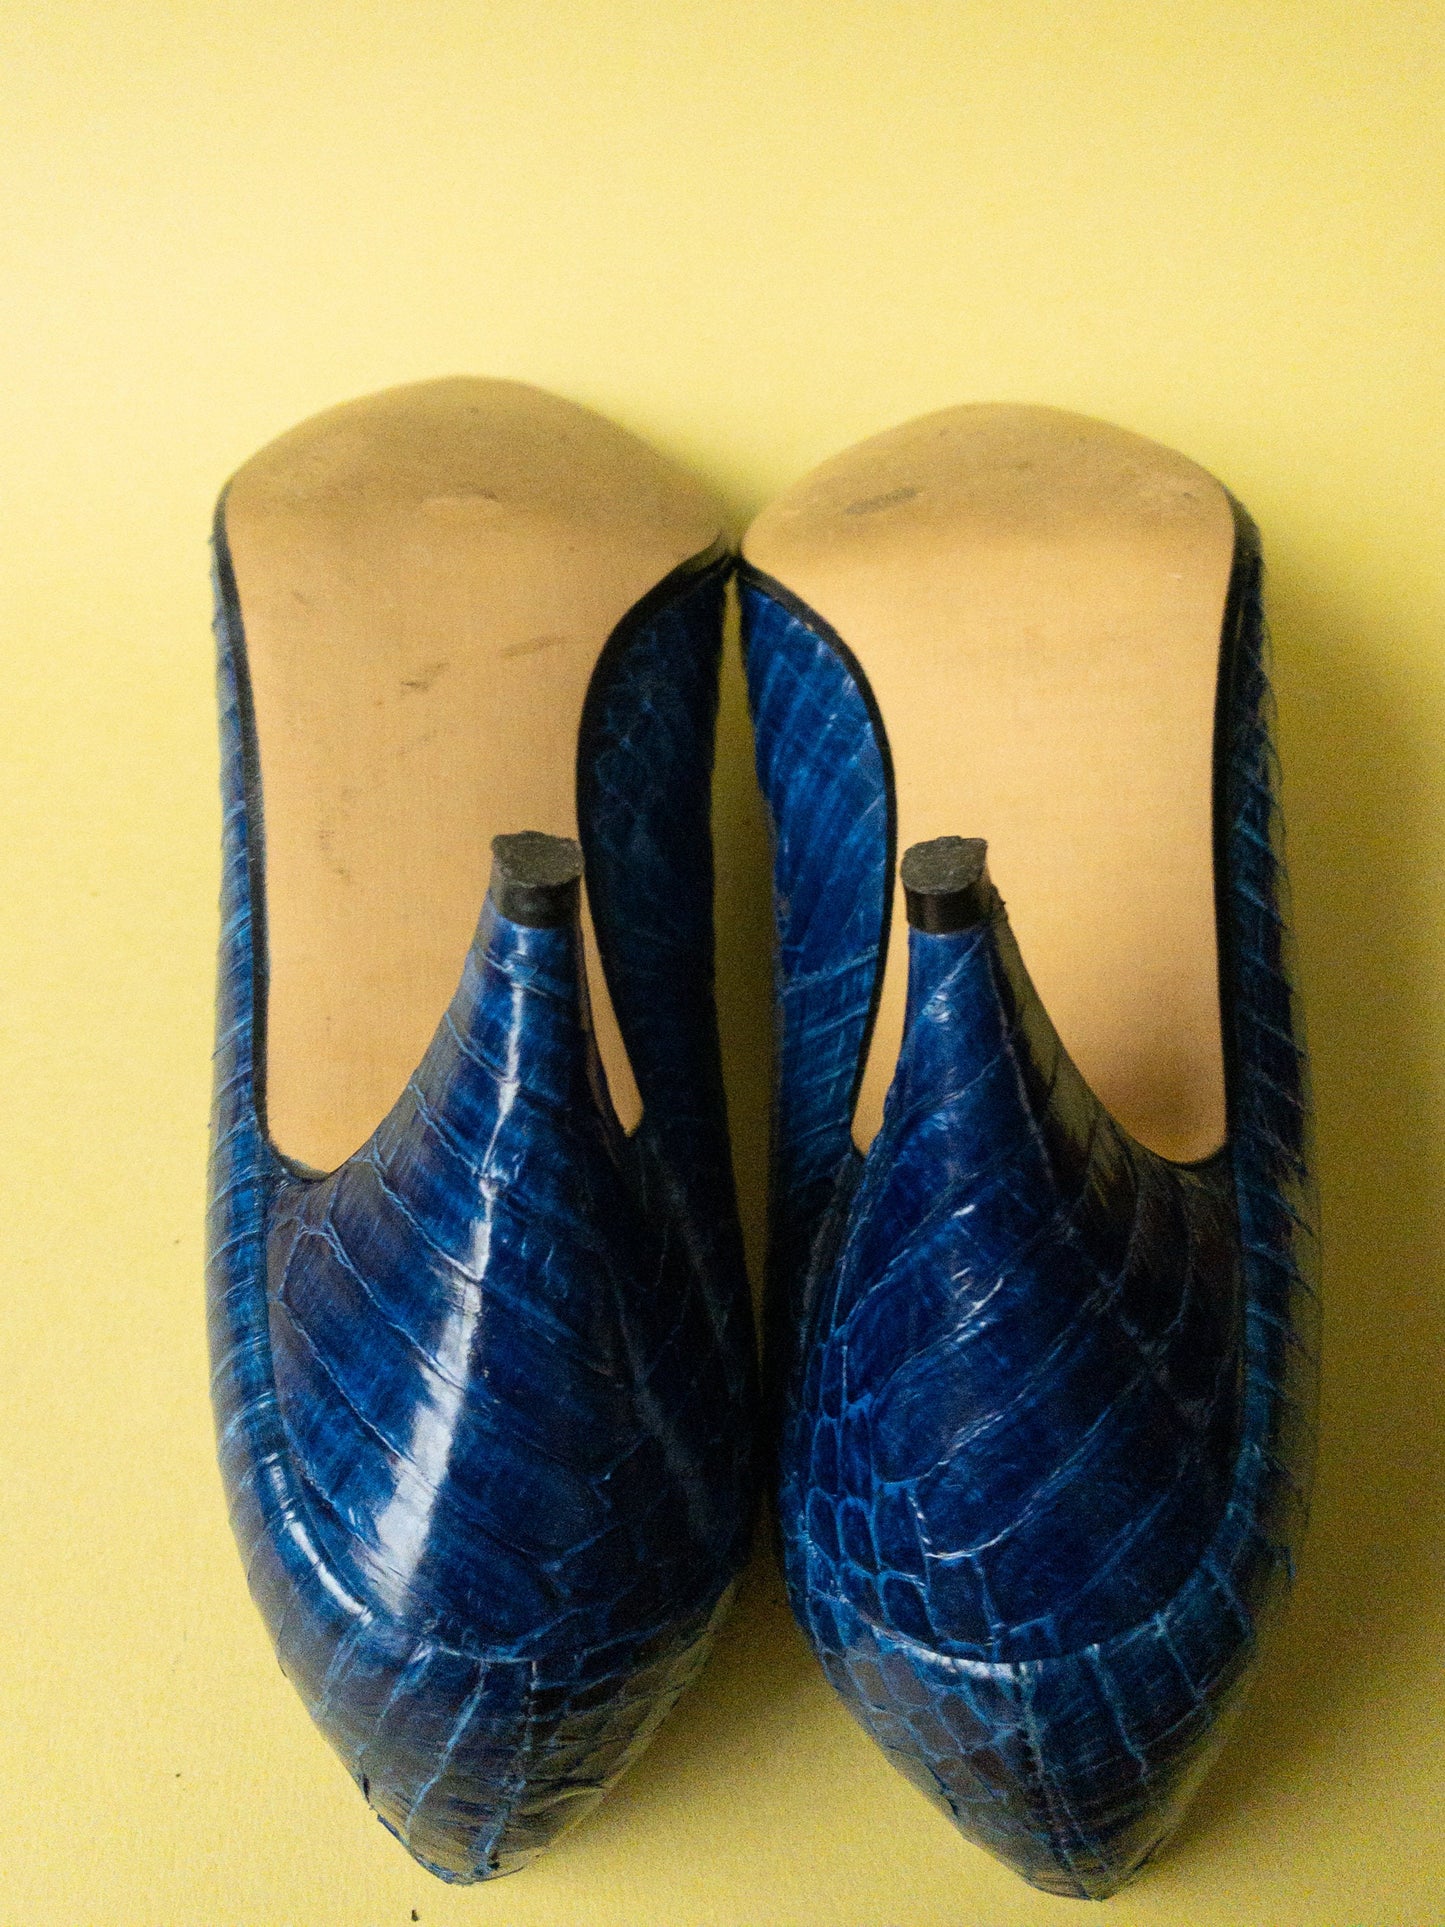 80s Blue Snakeskin Rosette High Heel Pumps  by J Renee